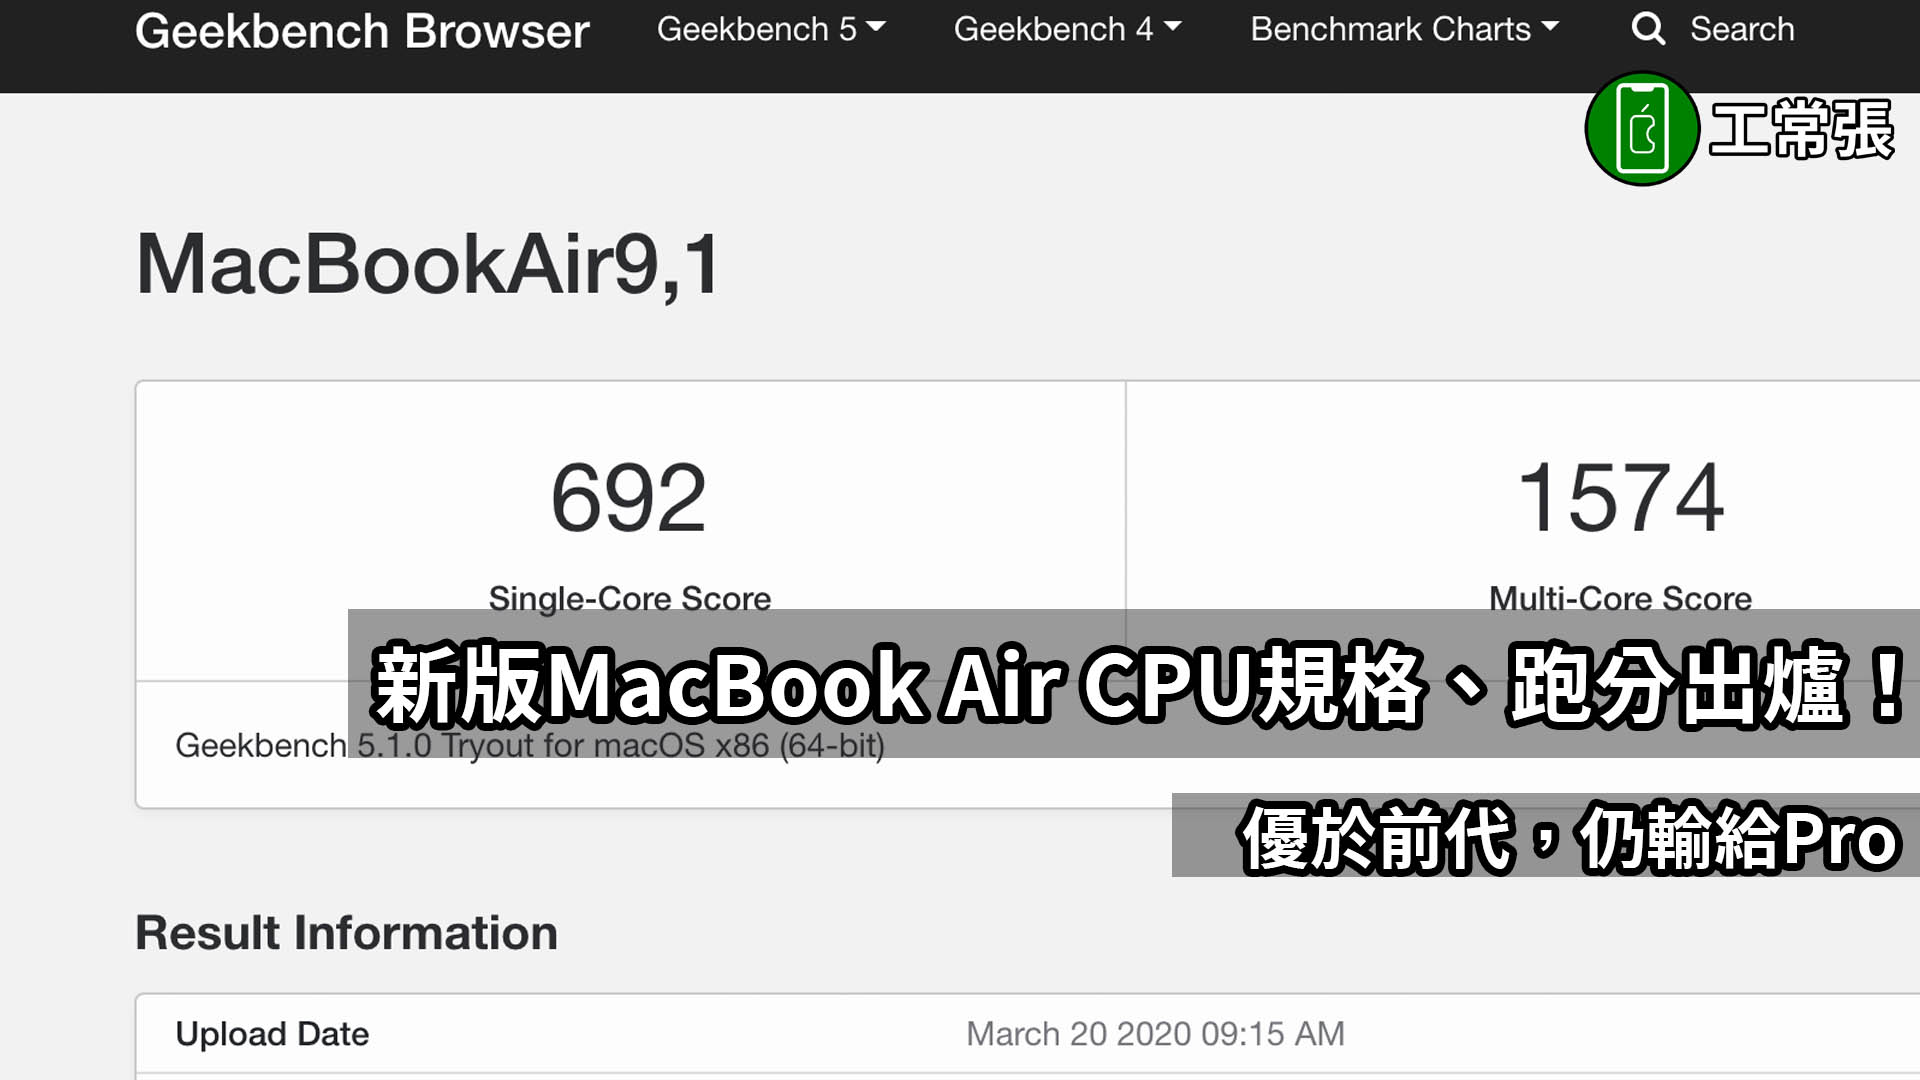 MacBook Air Pro 比較